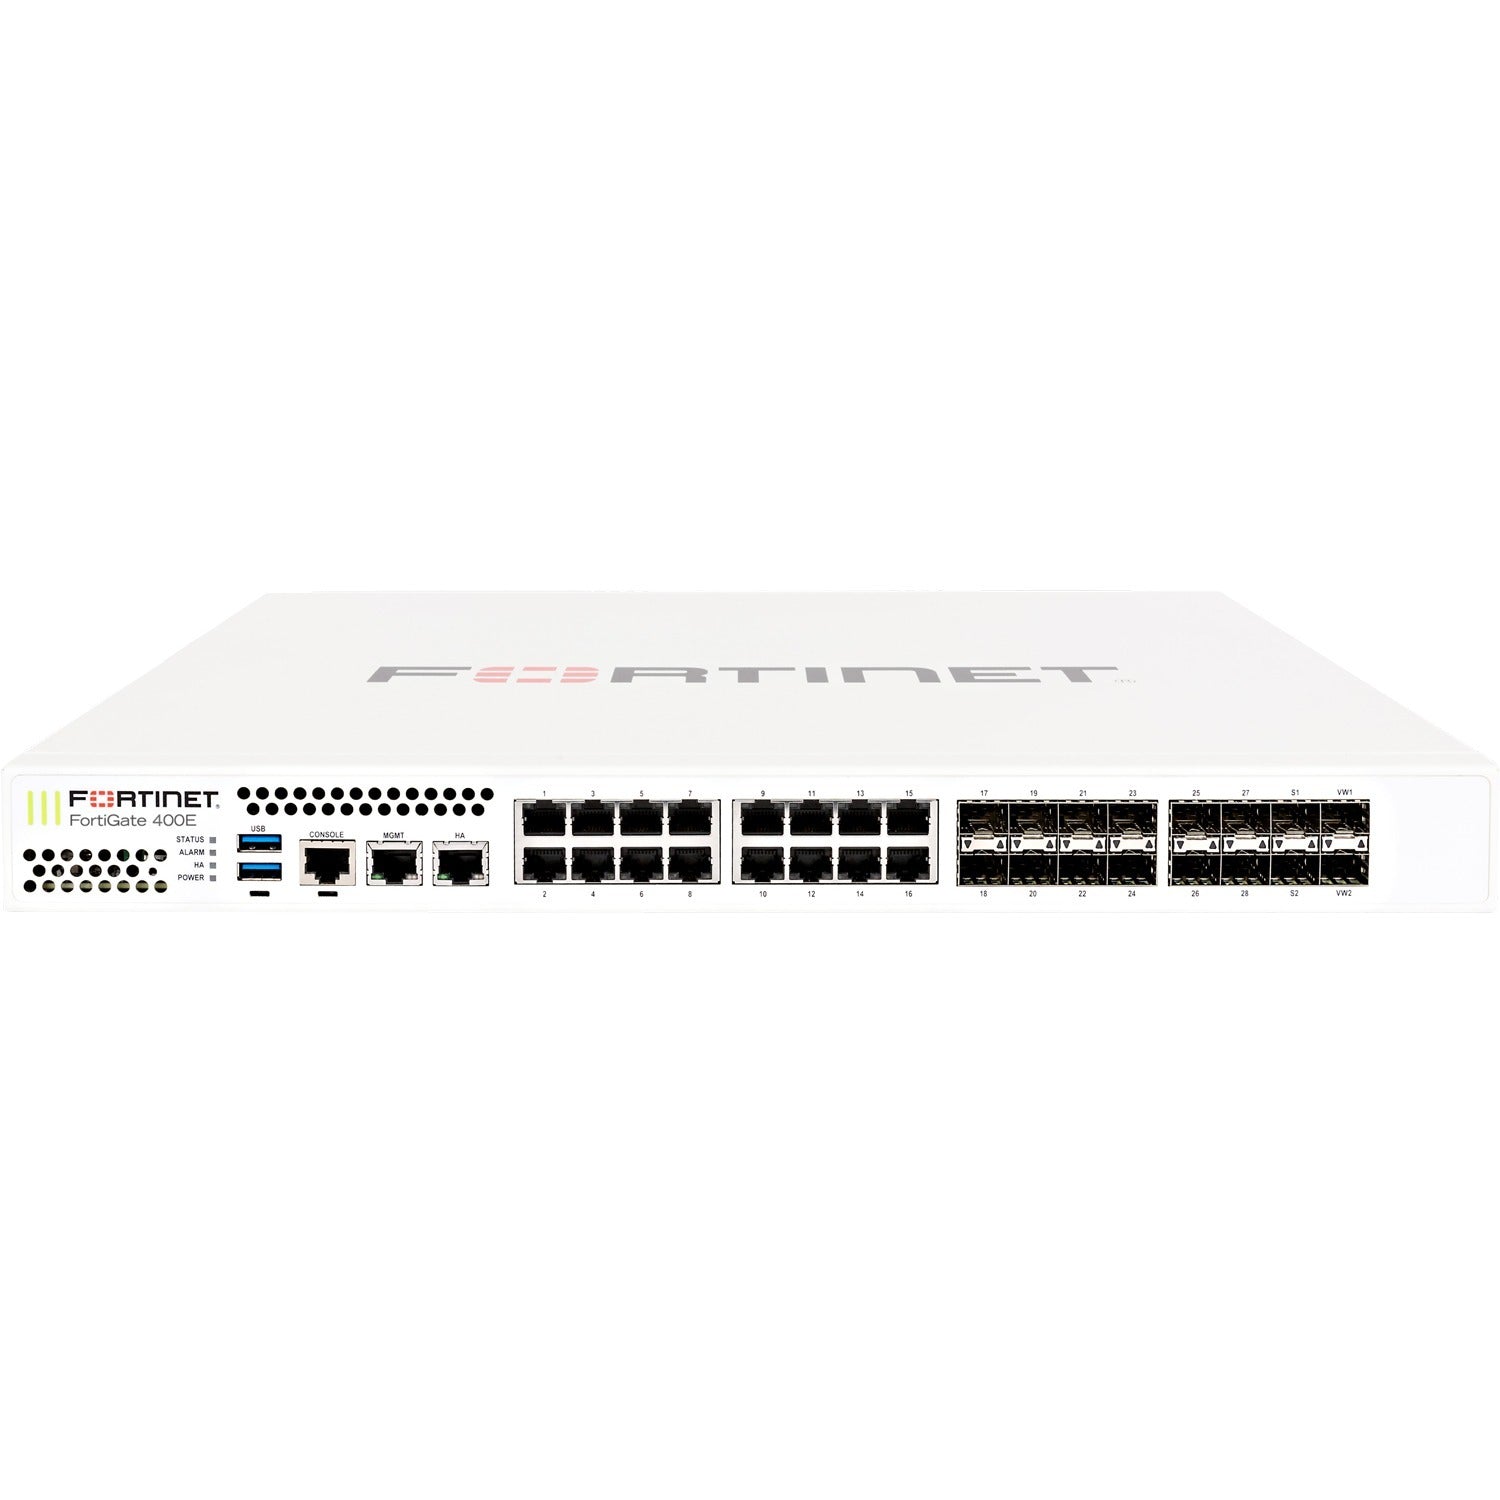 Fortinet FortiGate FG-400E Network Security/Firewall Appliance - FG-400E-BYPASS-LENC